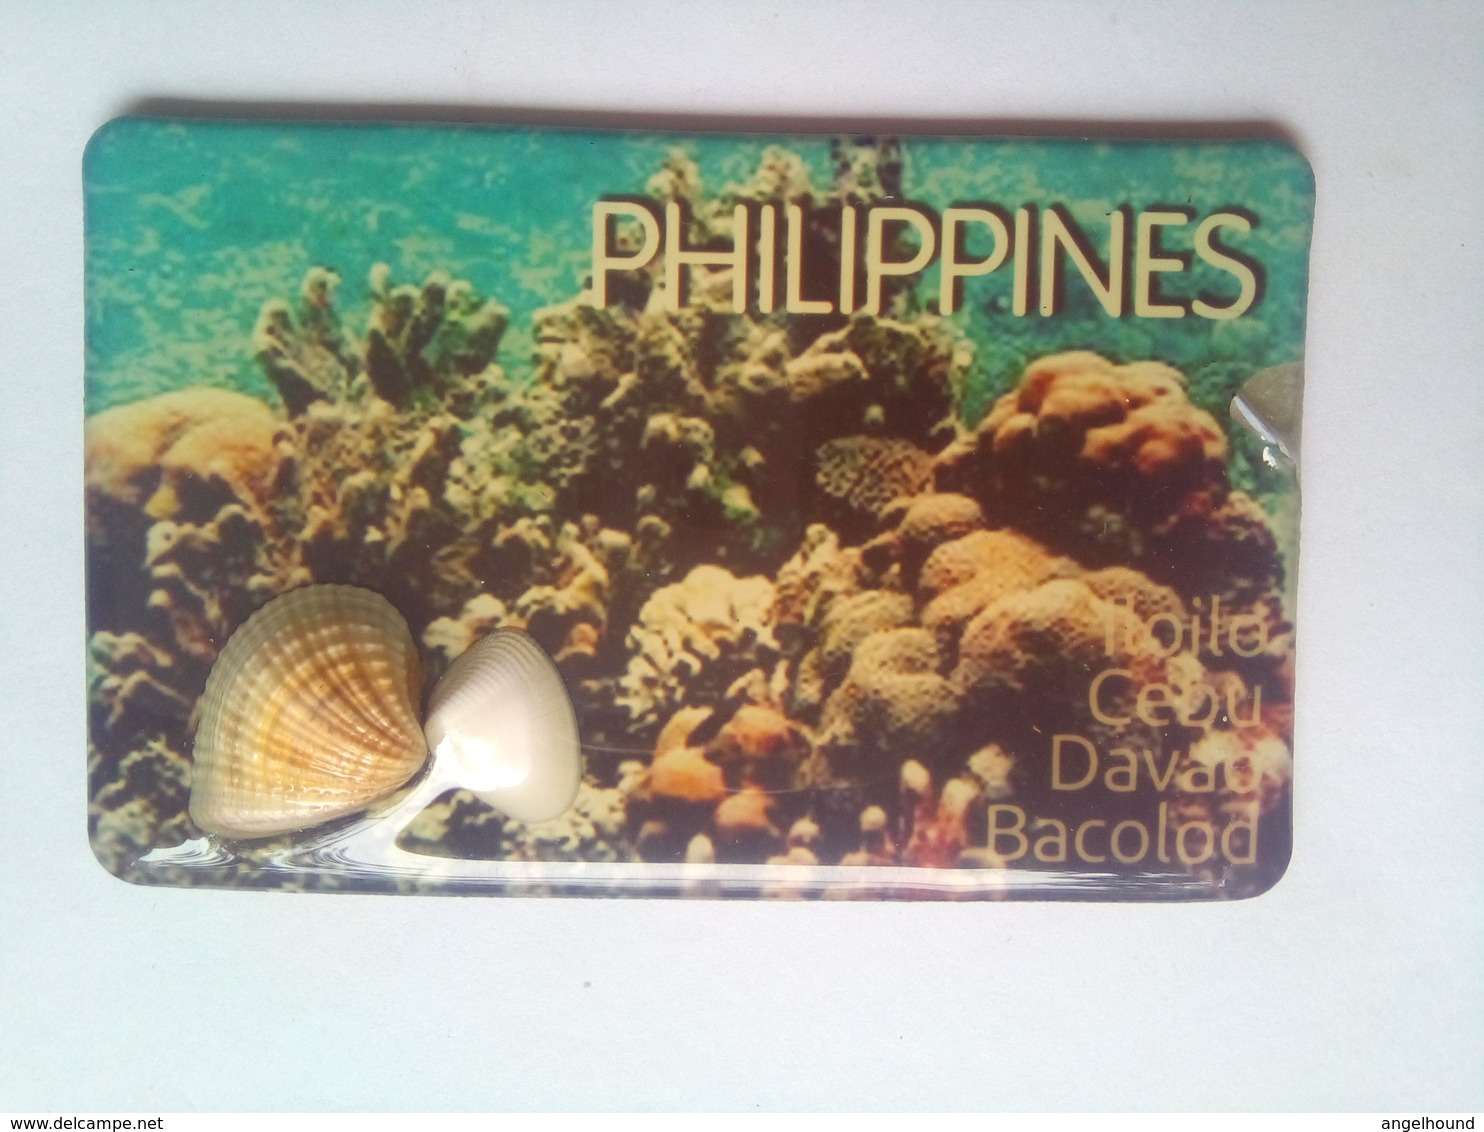 Shells Iloilo Cebu Davao Bacolod - Transport